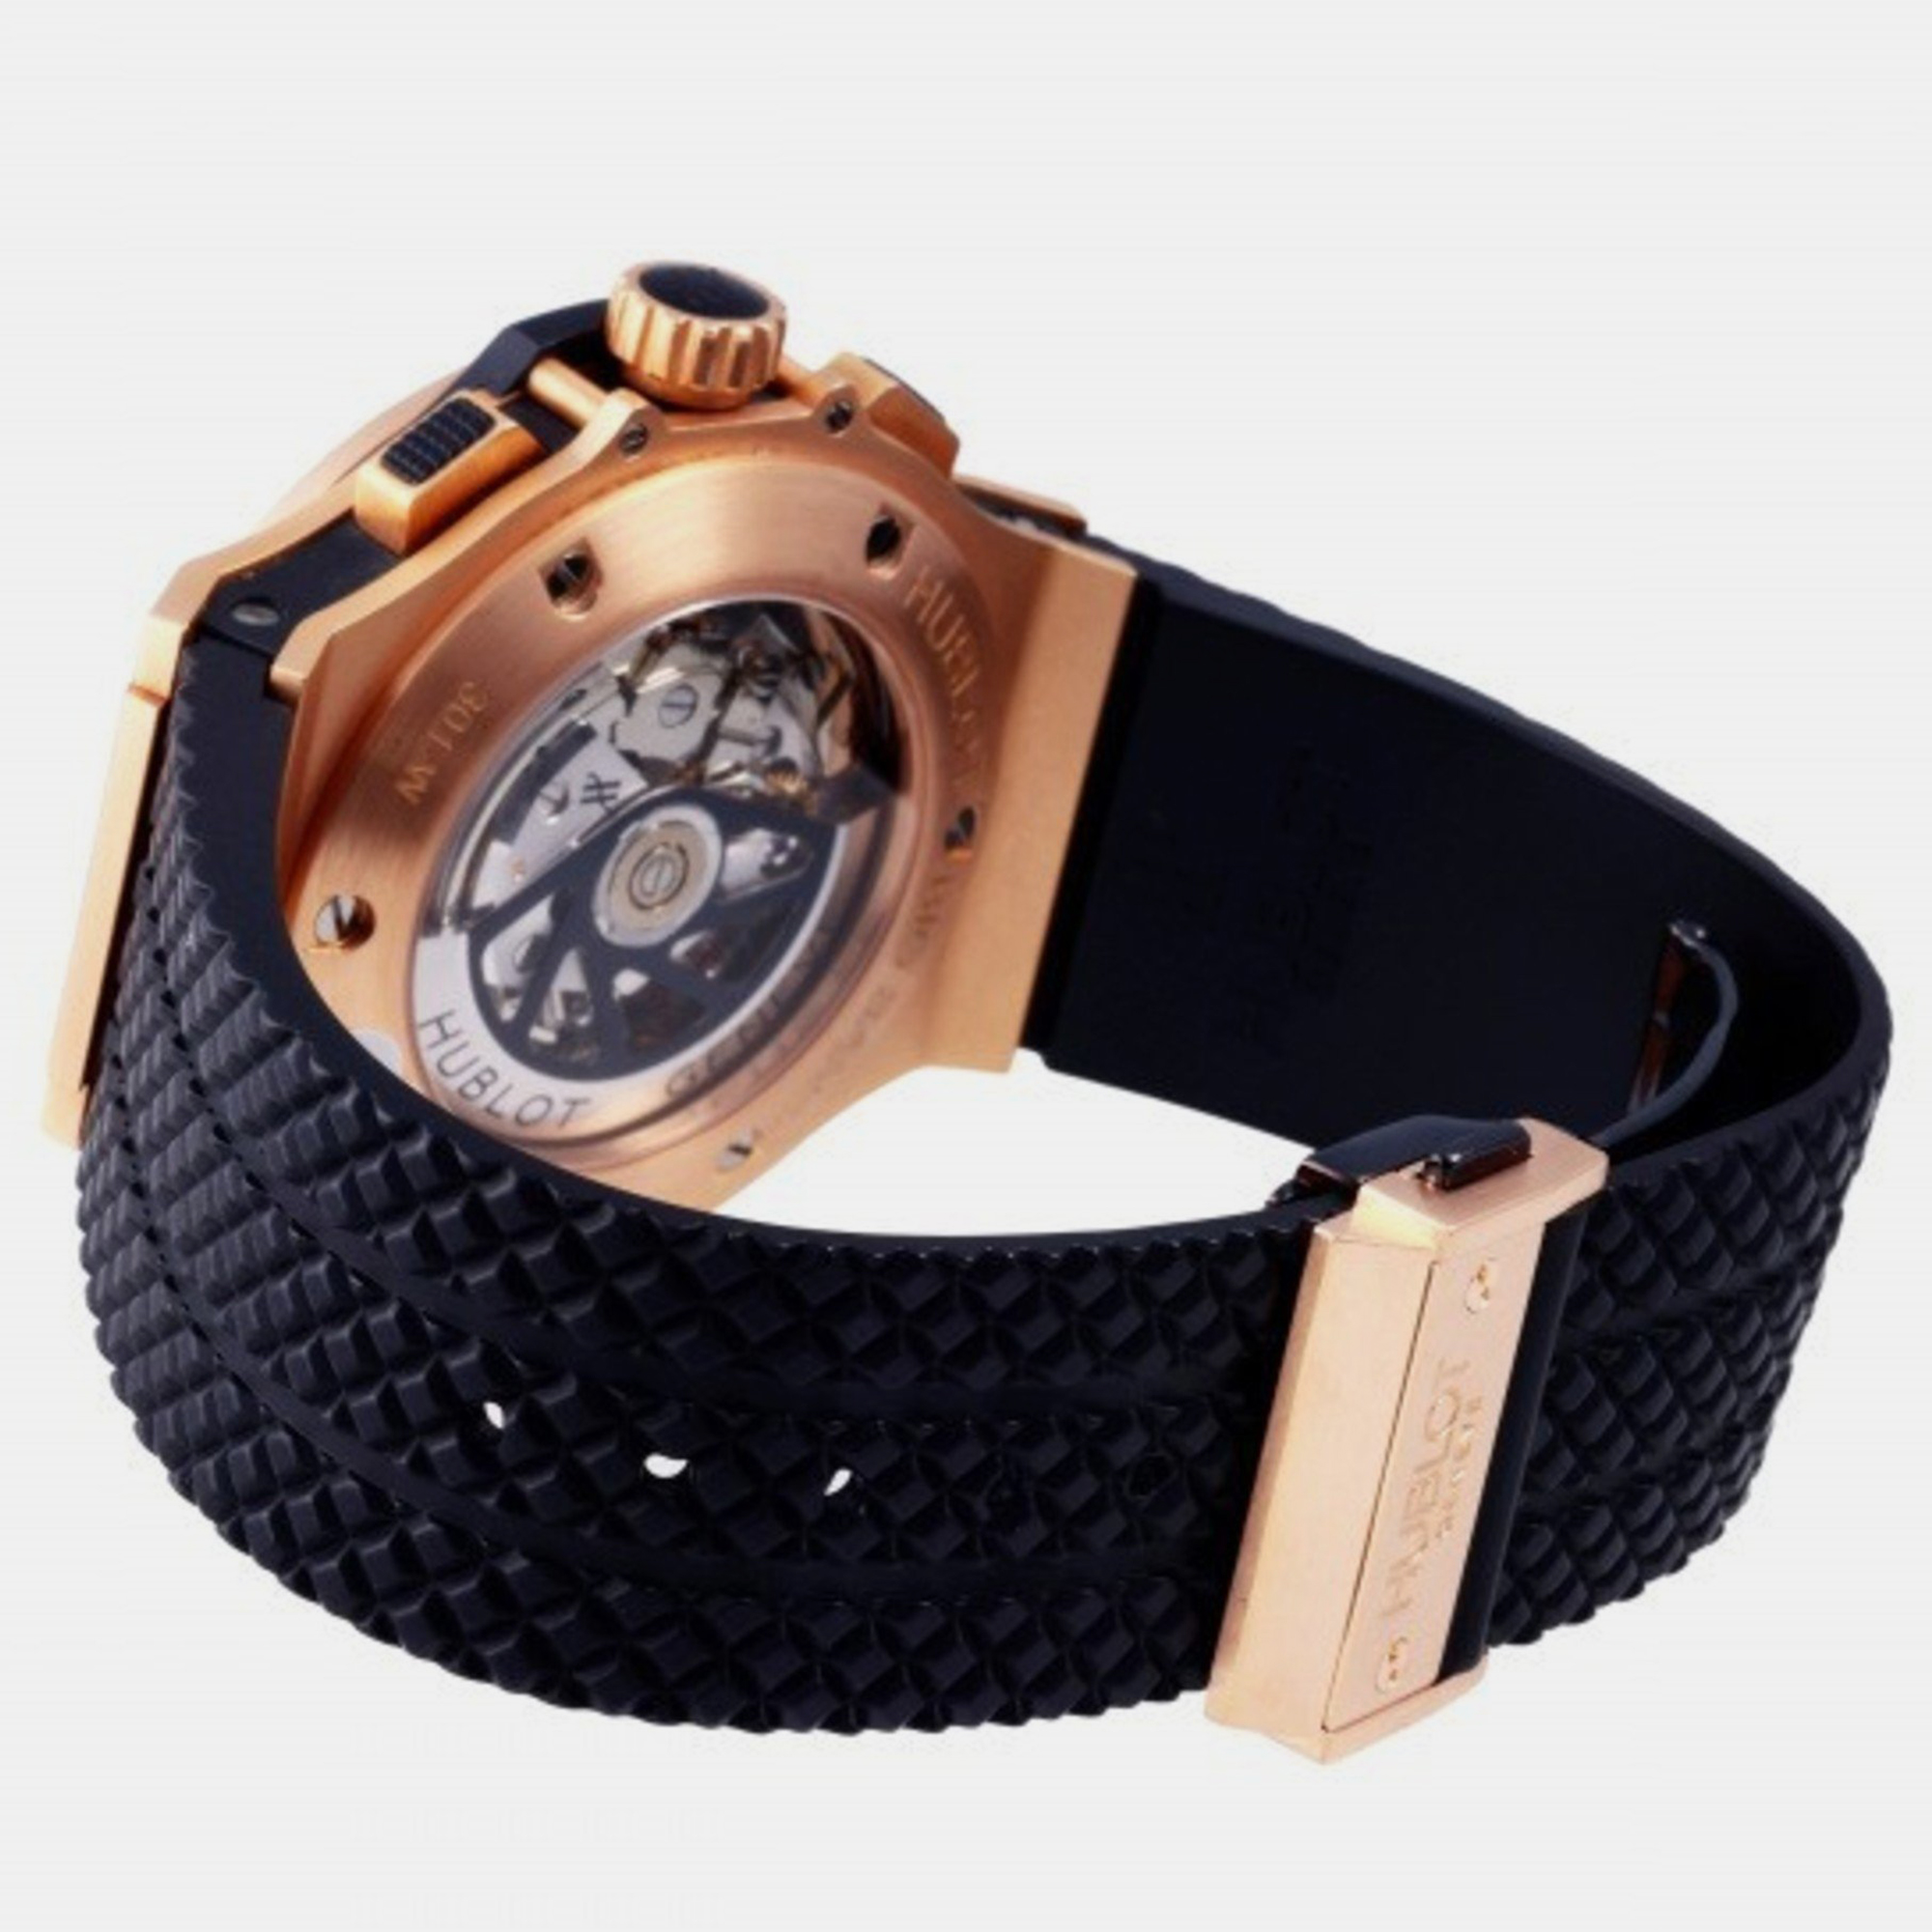 Hublot Gold 18k Rose Gold Big Bang 301.PI.500.RX.114 Automatic Men's Wristwatch 44 Mm